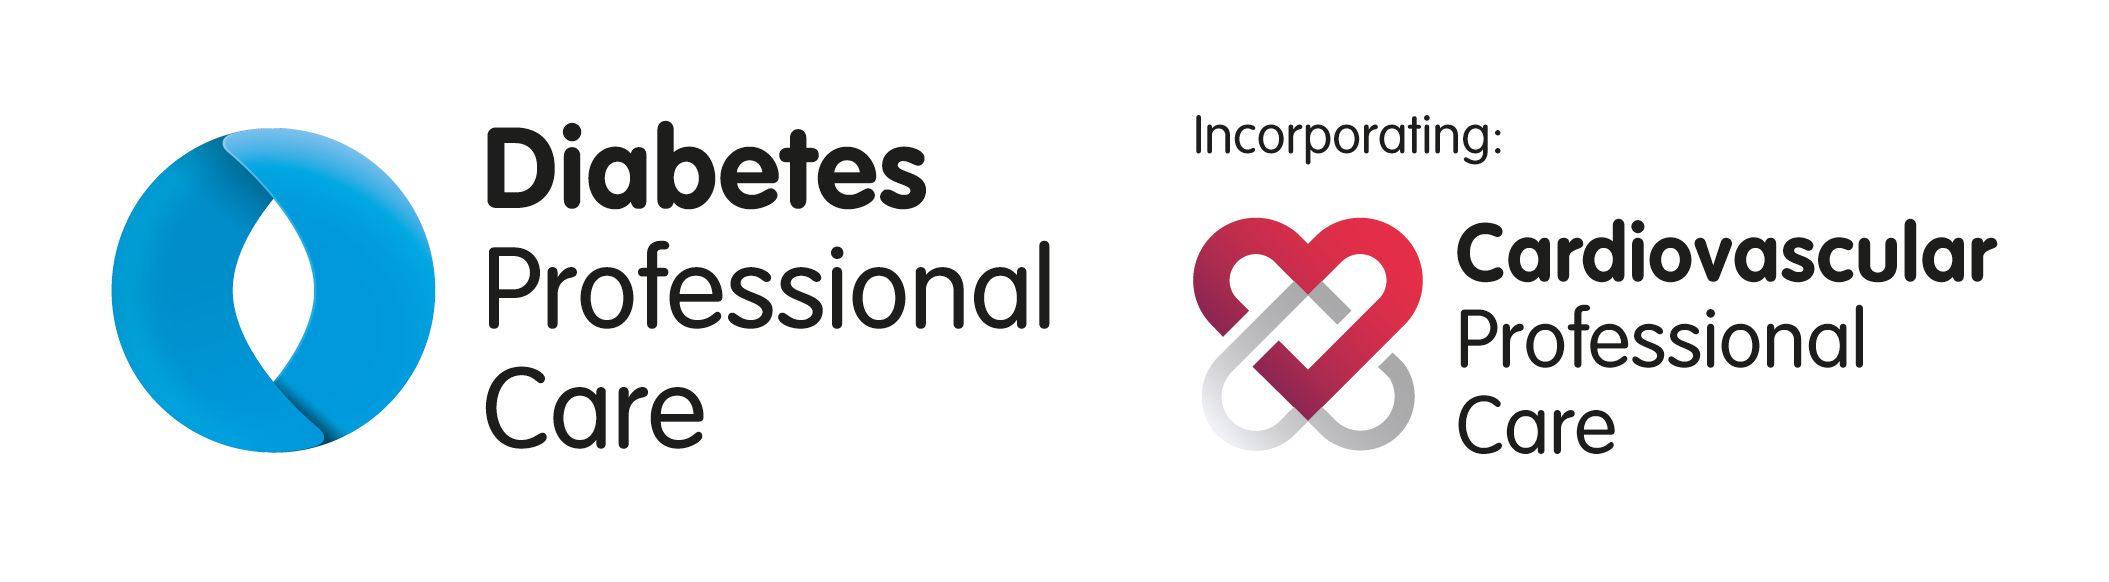 Diabetes Professional Care incorporating Cardiovascular Professional Care